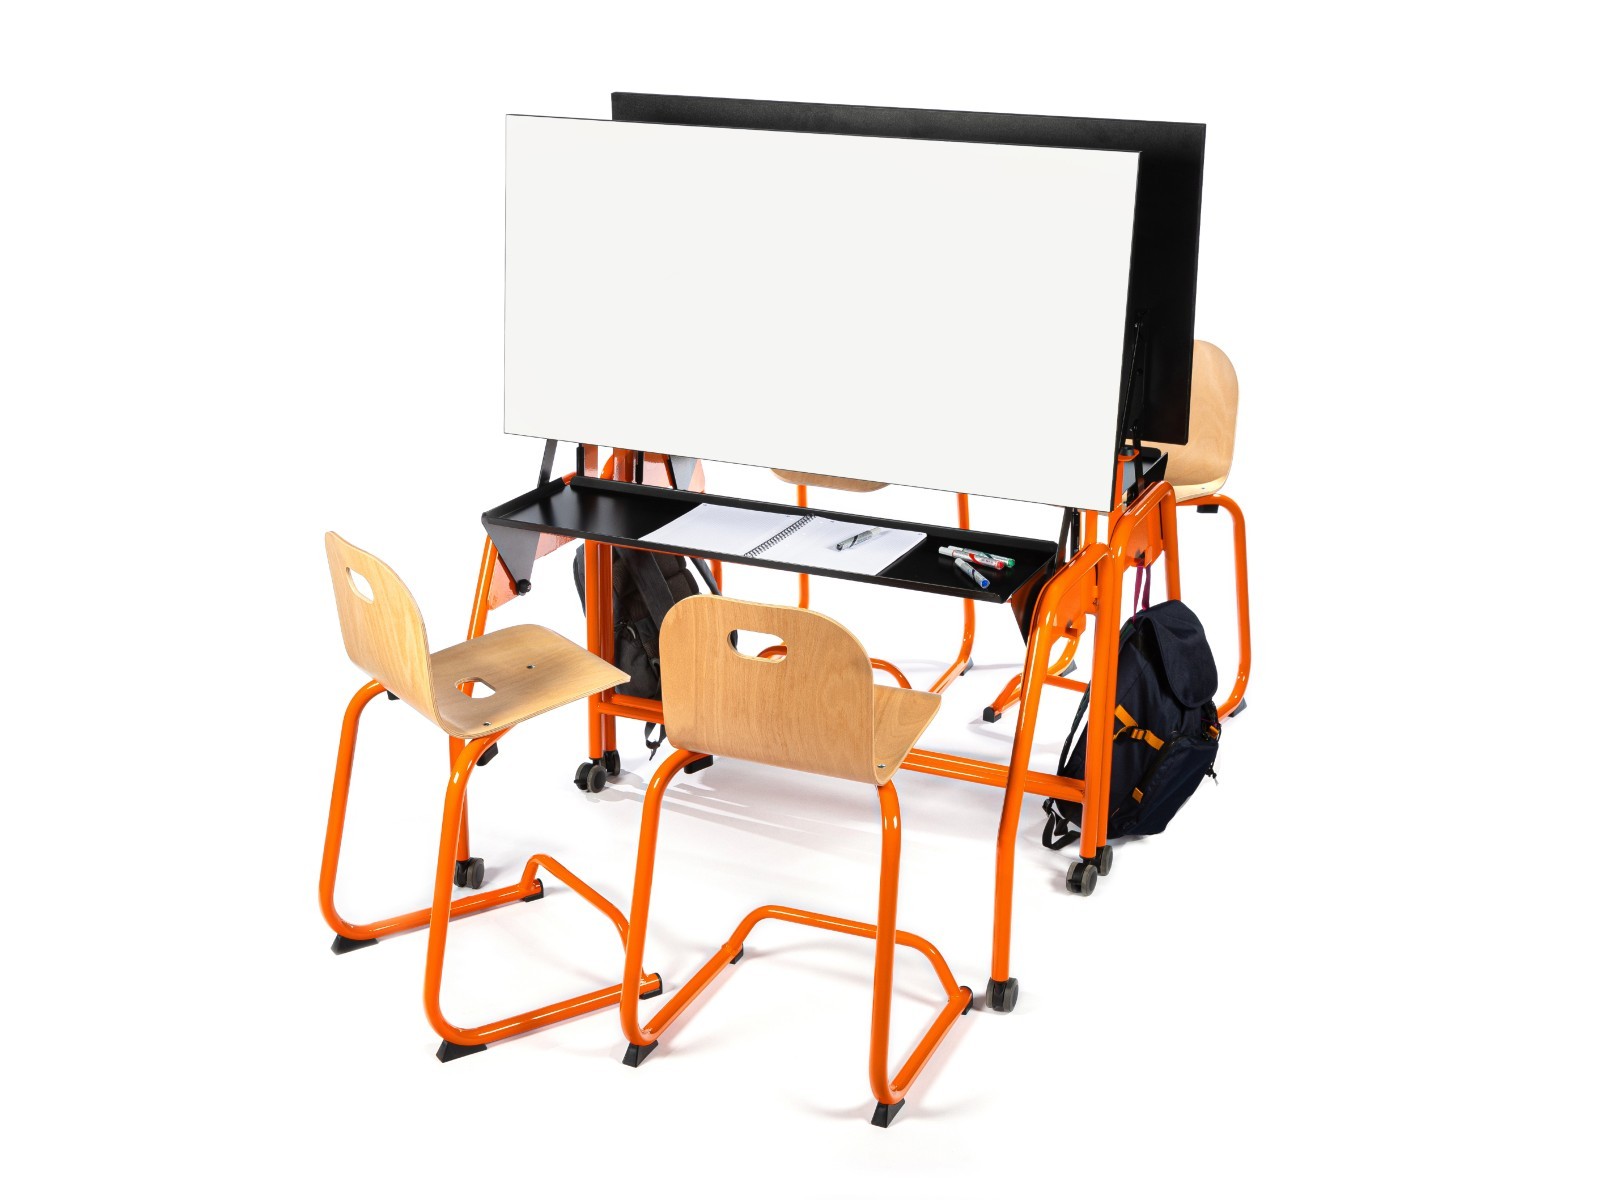 Bi-plane school table for flexible class